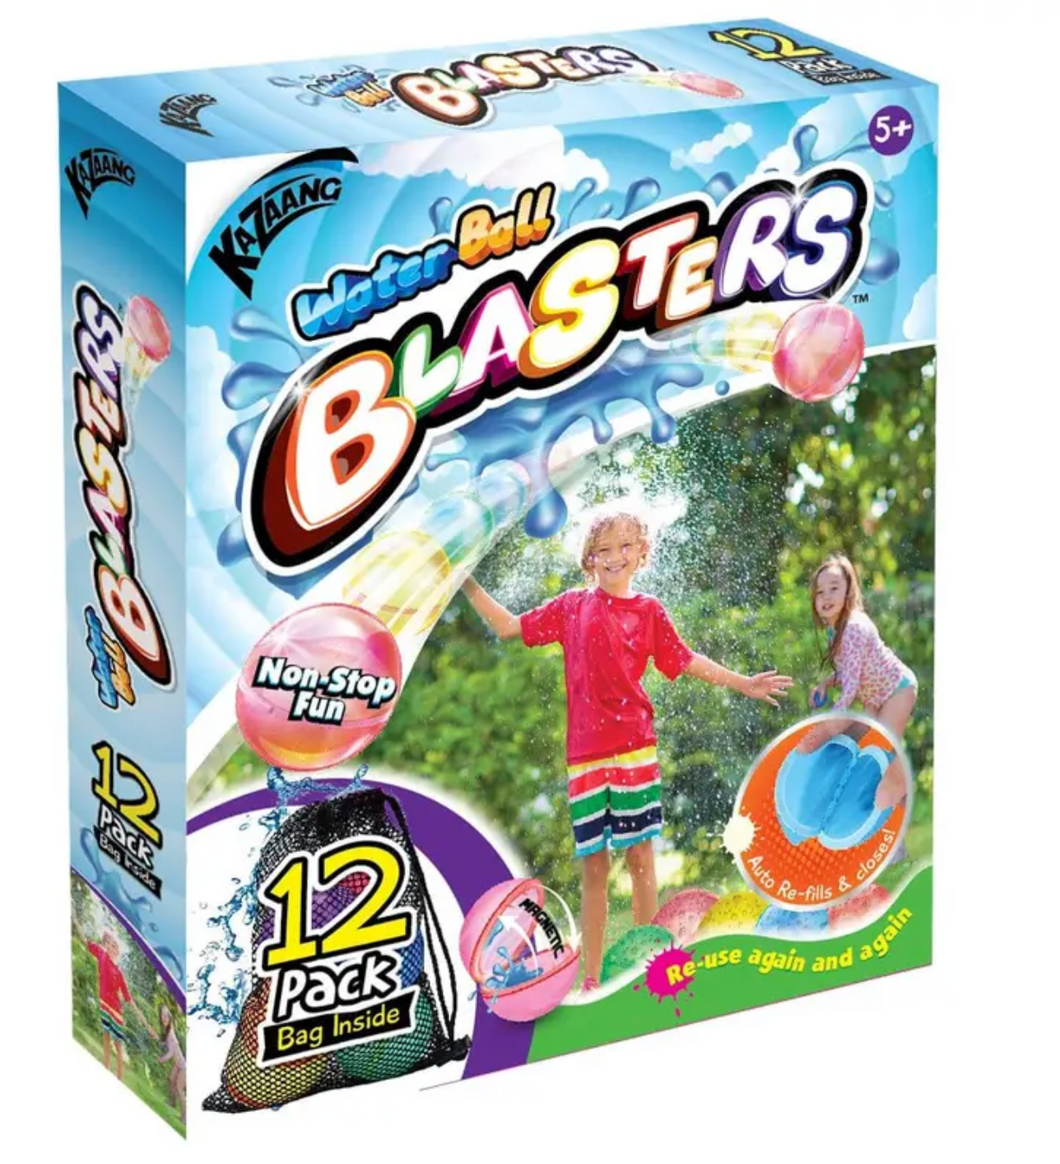 Kazaang Water Ball Blasters - Reusable Water Bombs 12 Pack